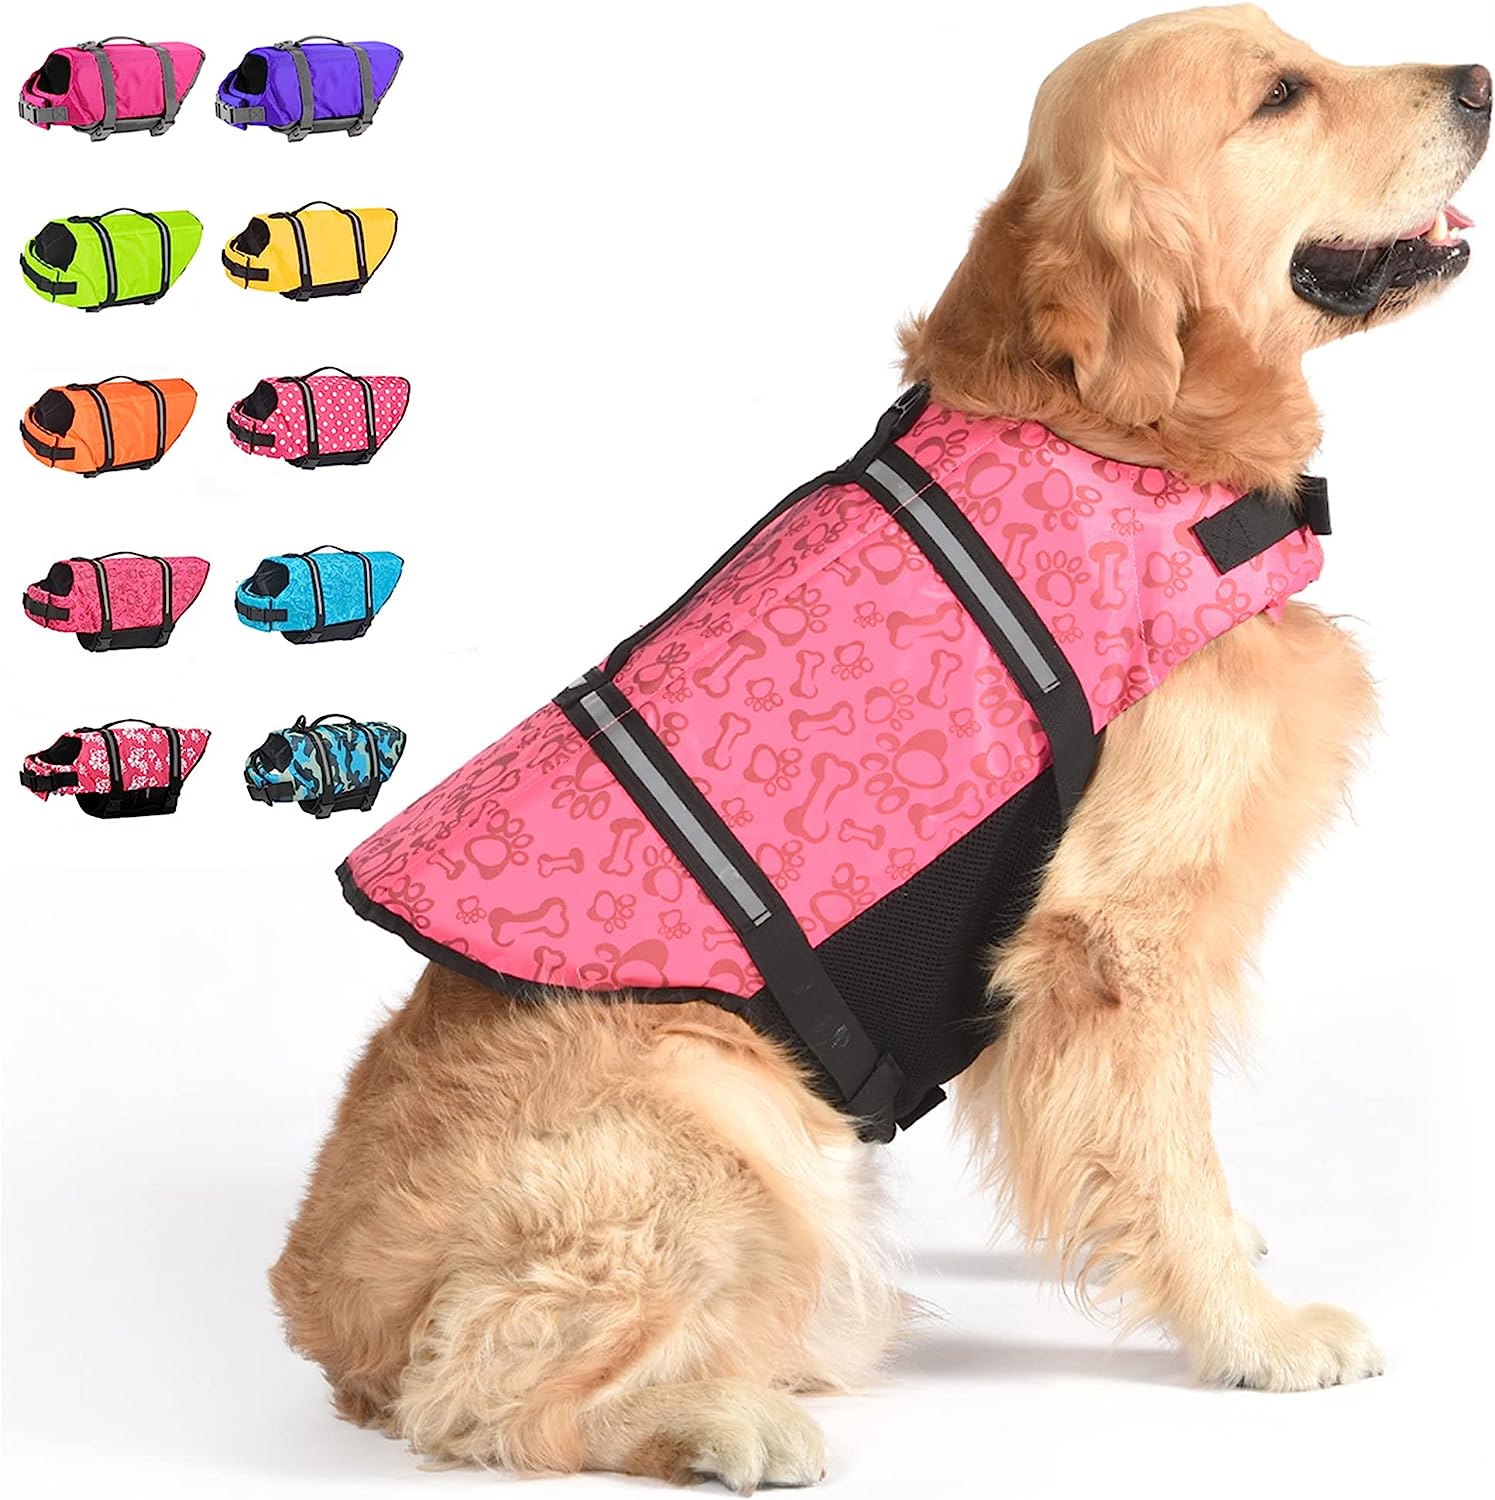 Tsaron Swimsuit Preserver tare da Reflective Stripes Dog Life Jacket